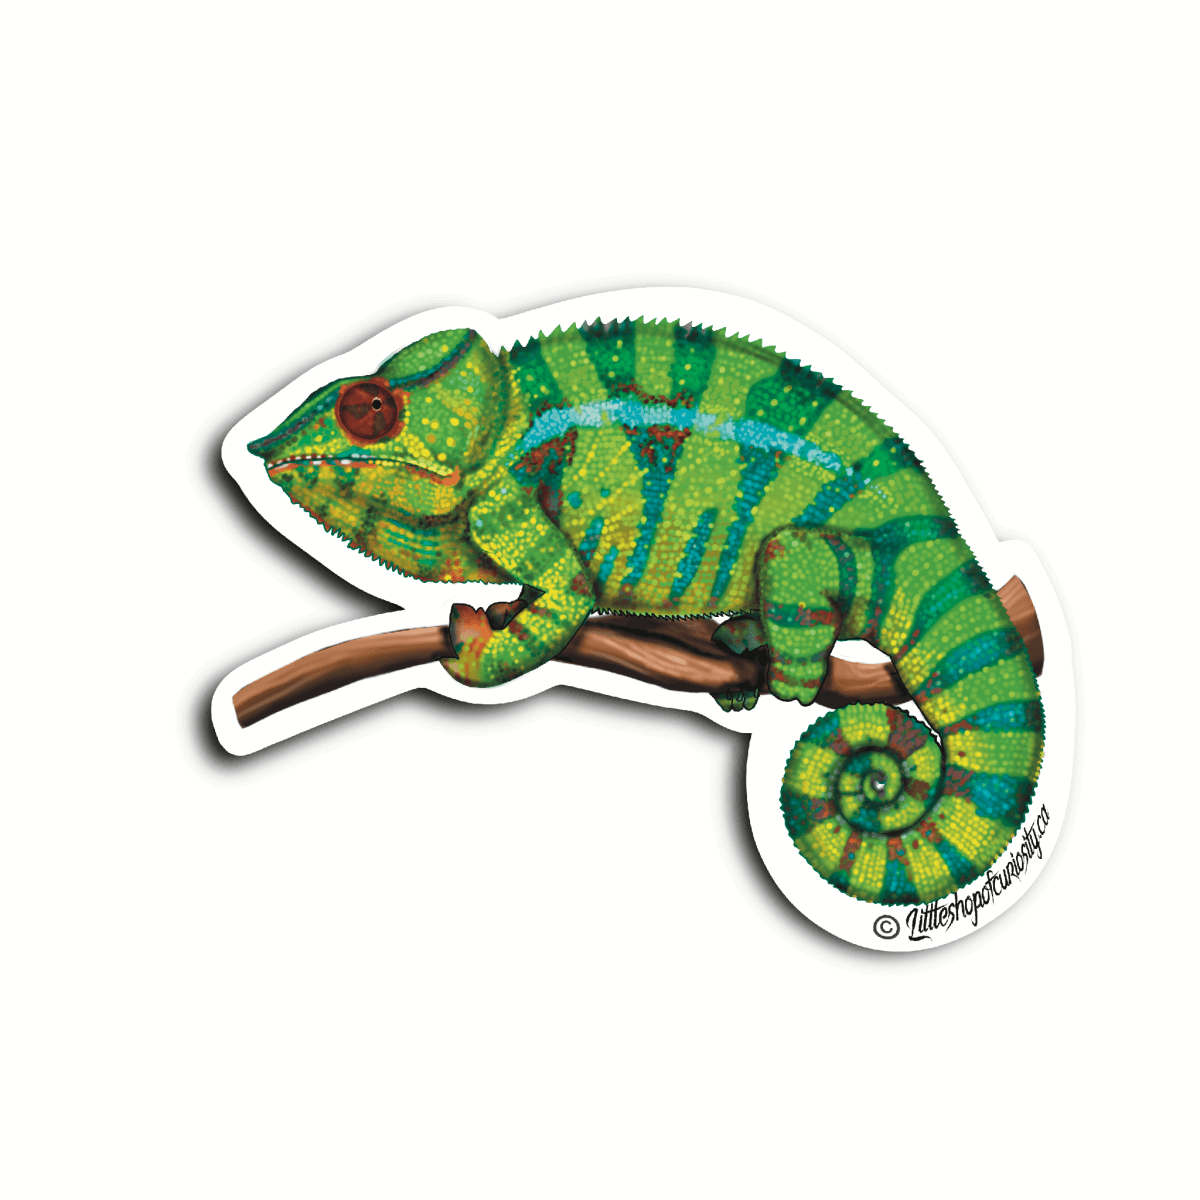 Panther Chameleon Sticker - Colour Sticker - Little Shop of Curiosity